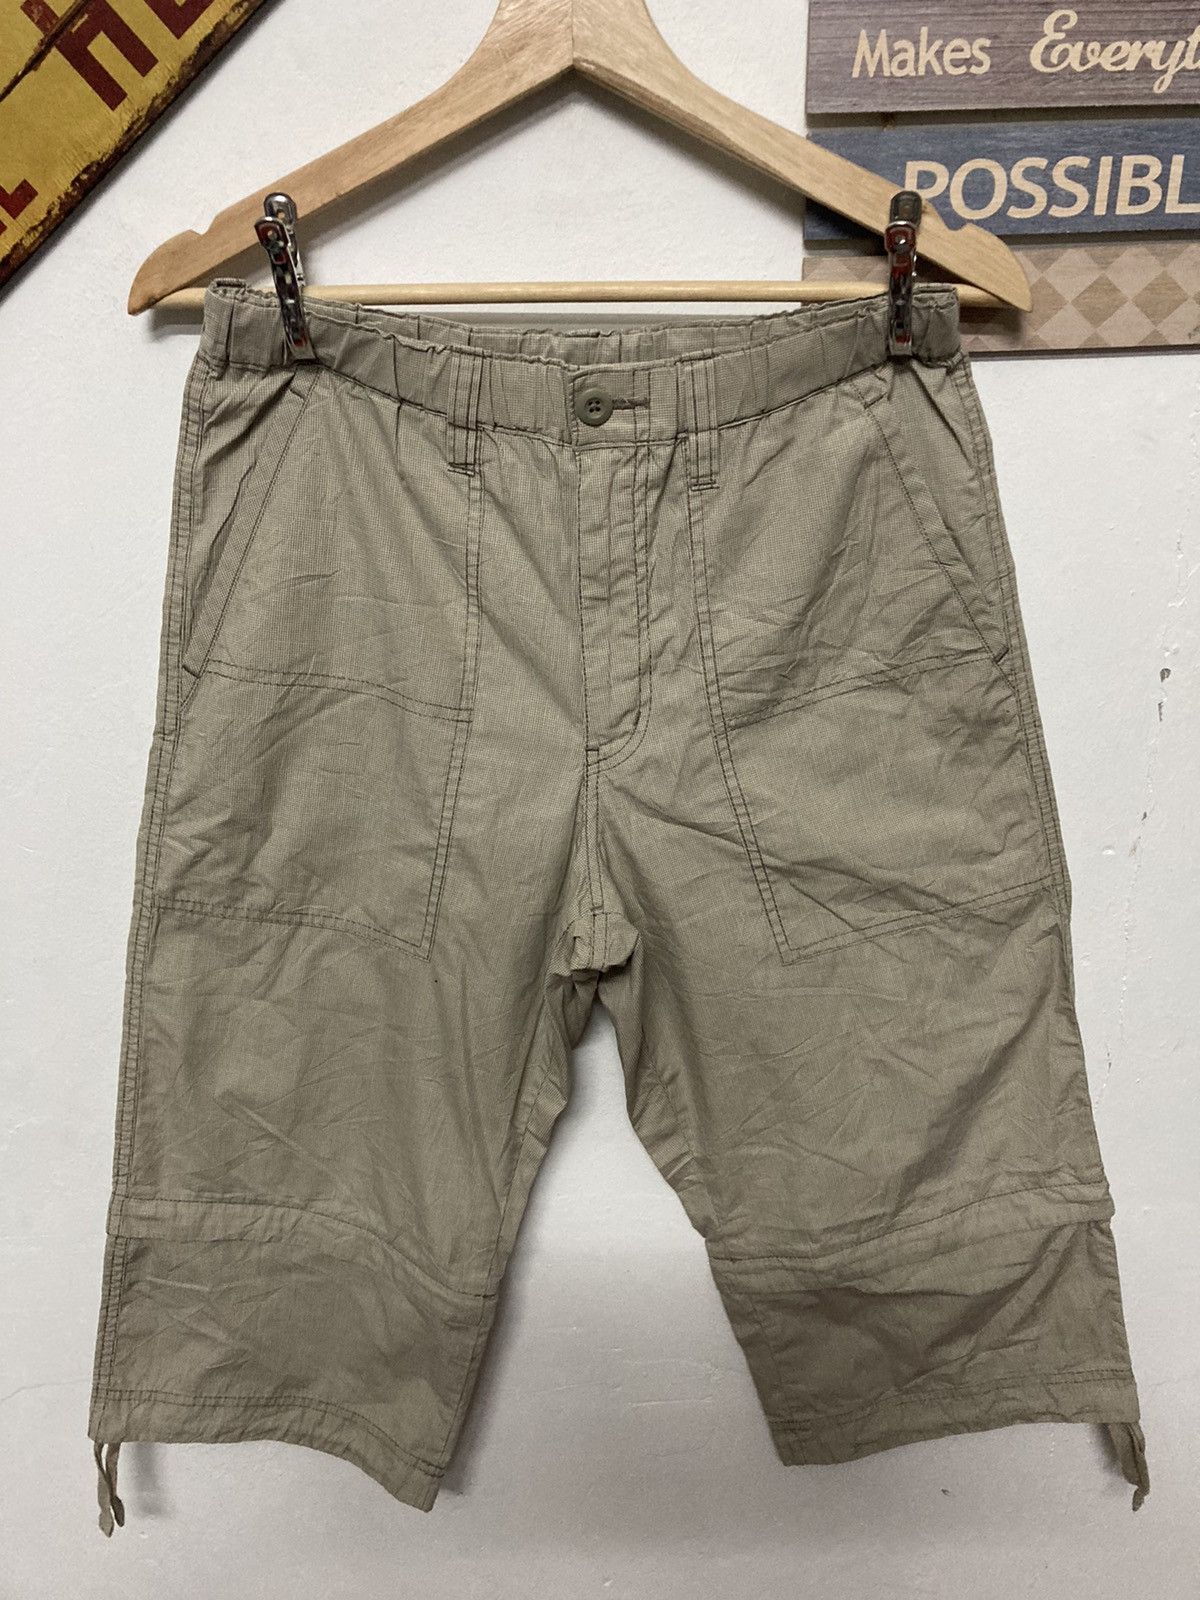 Vintage Uniqlo 3 Quarter Drawstring Pant Size Up to 32 - 3